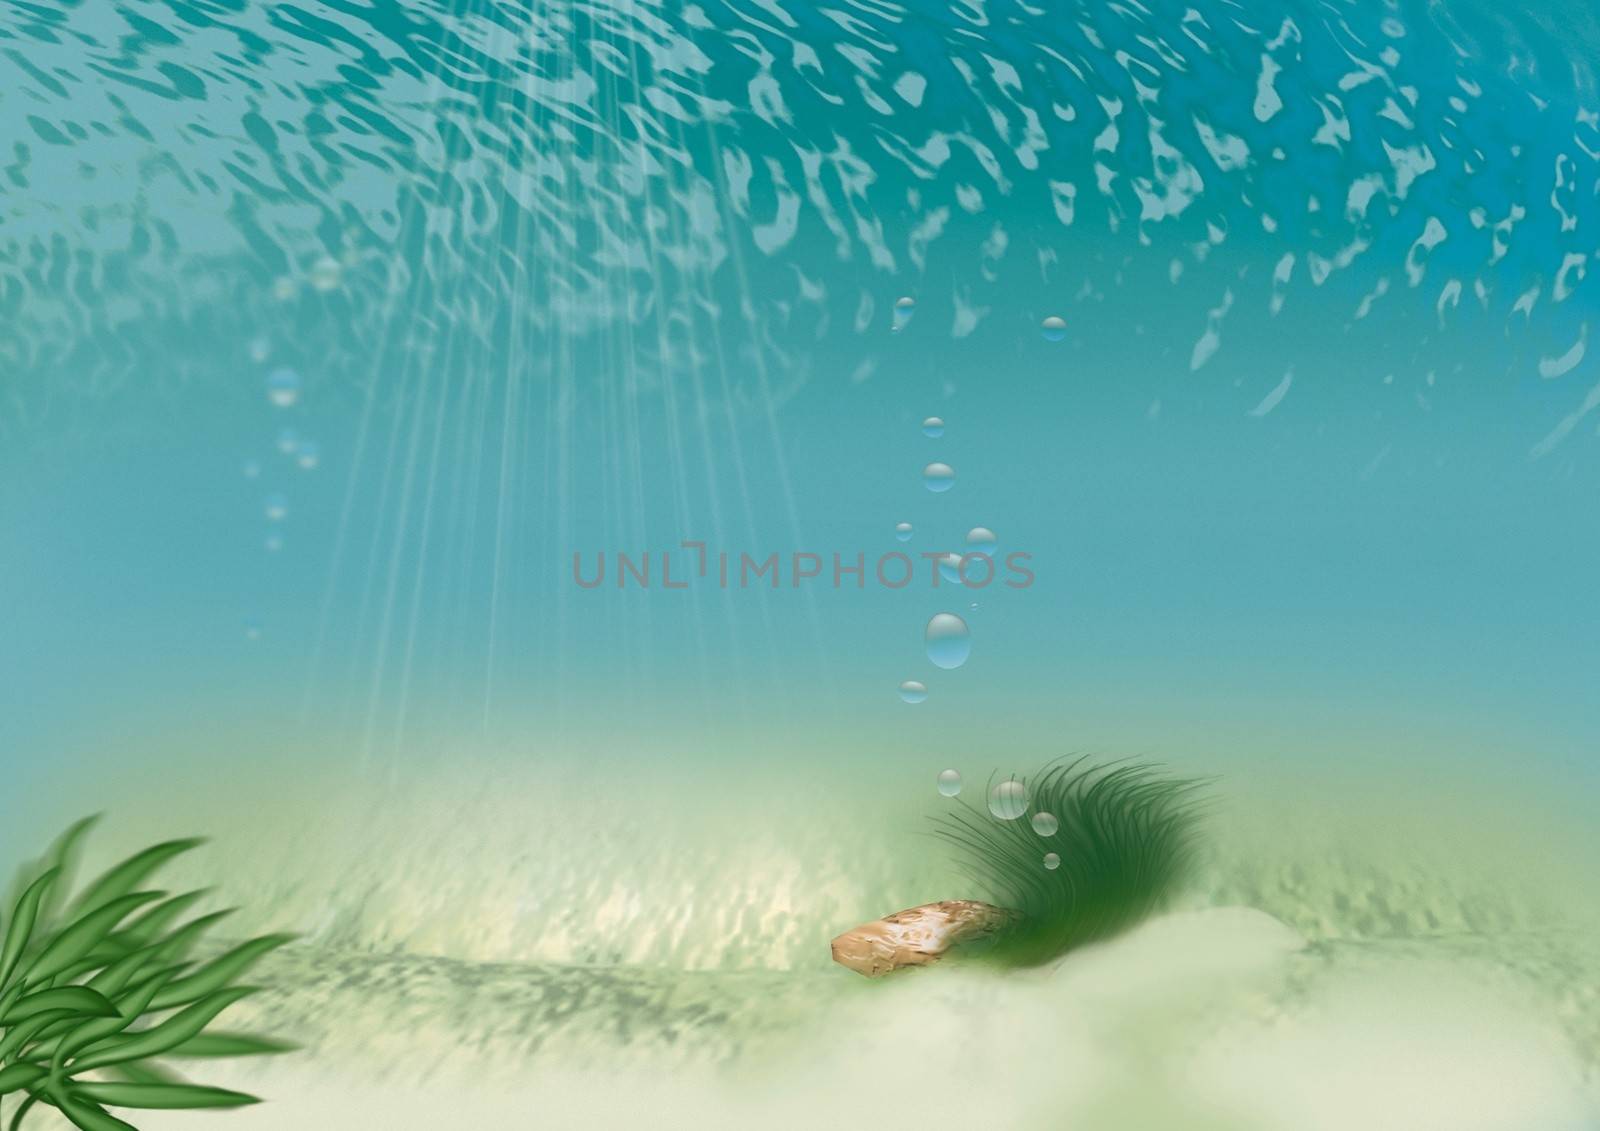 Underwater by illustratorCZ